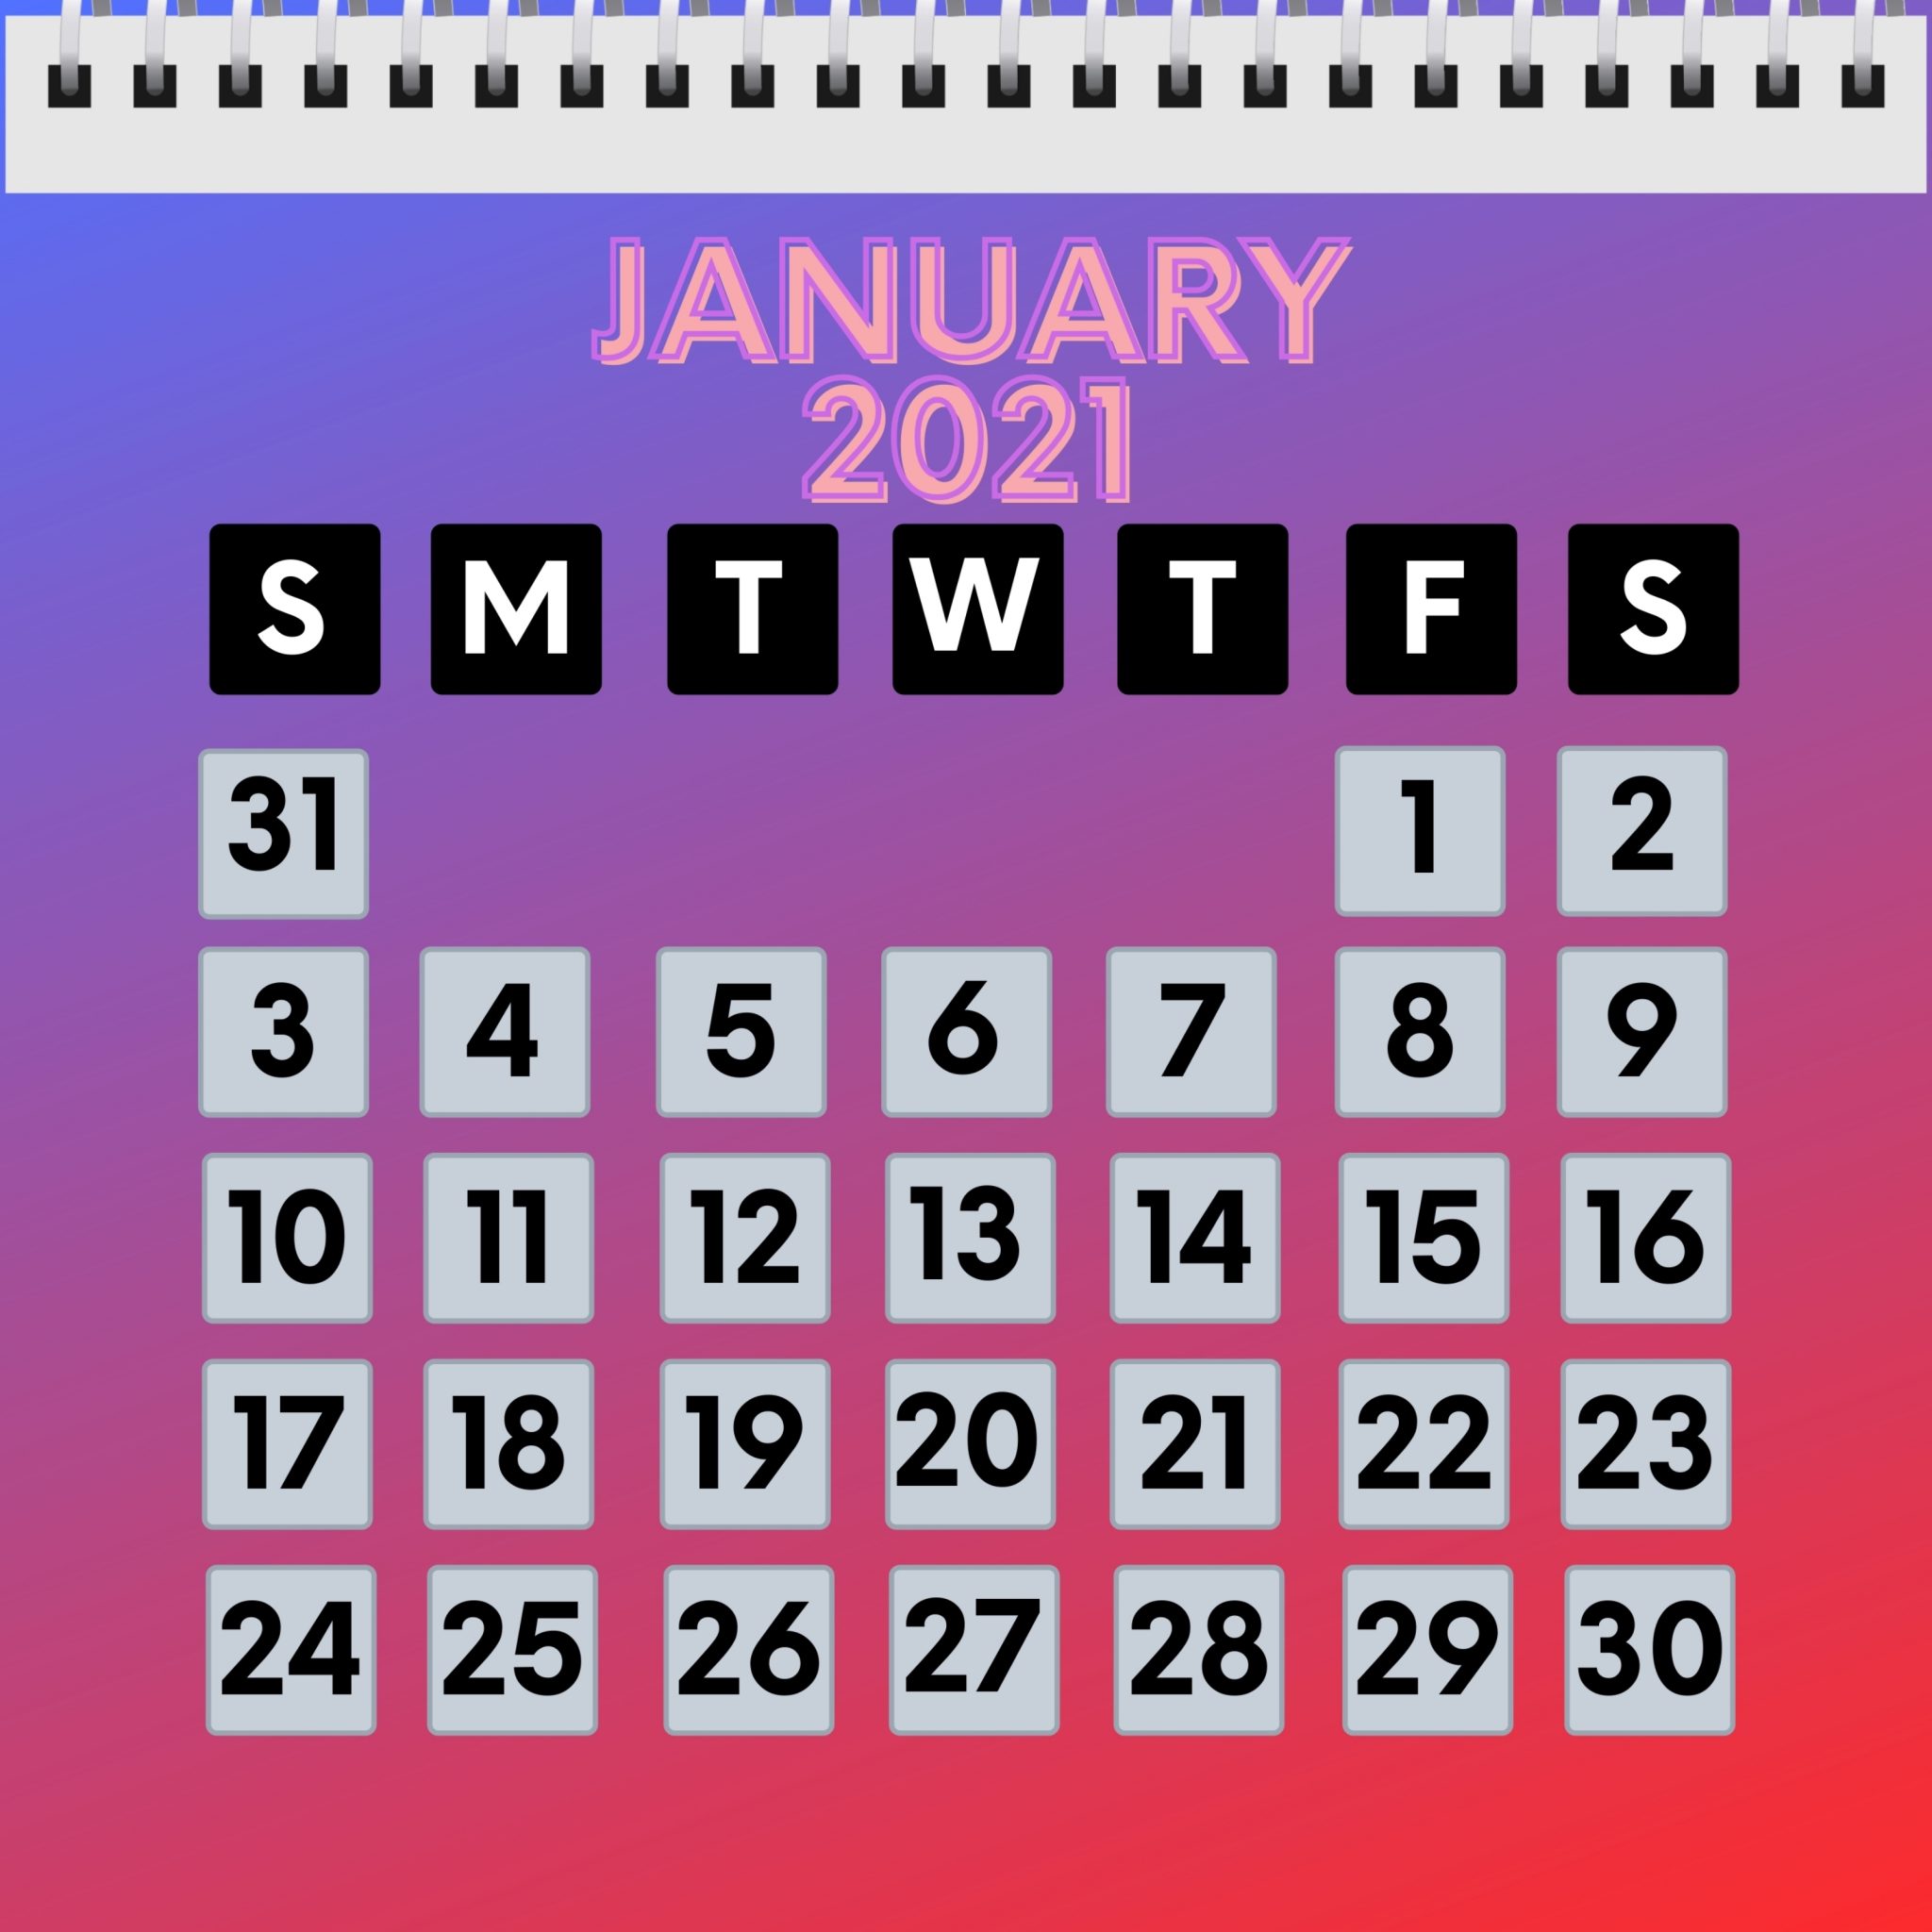 2048x2048 wallpapers iPad retina January 2021 Calendar iPad Wallpaper 2048x2048 pixels resolution